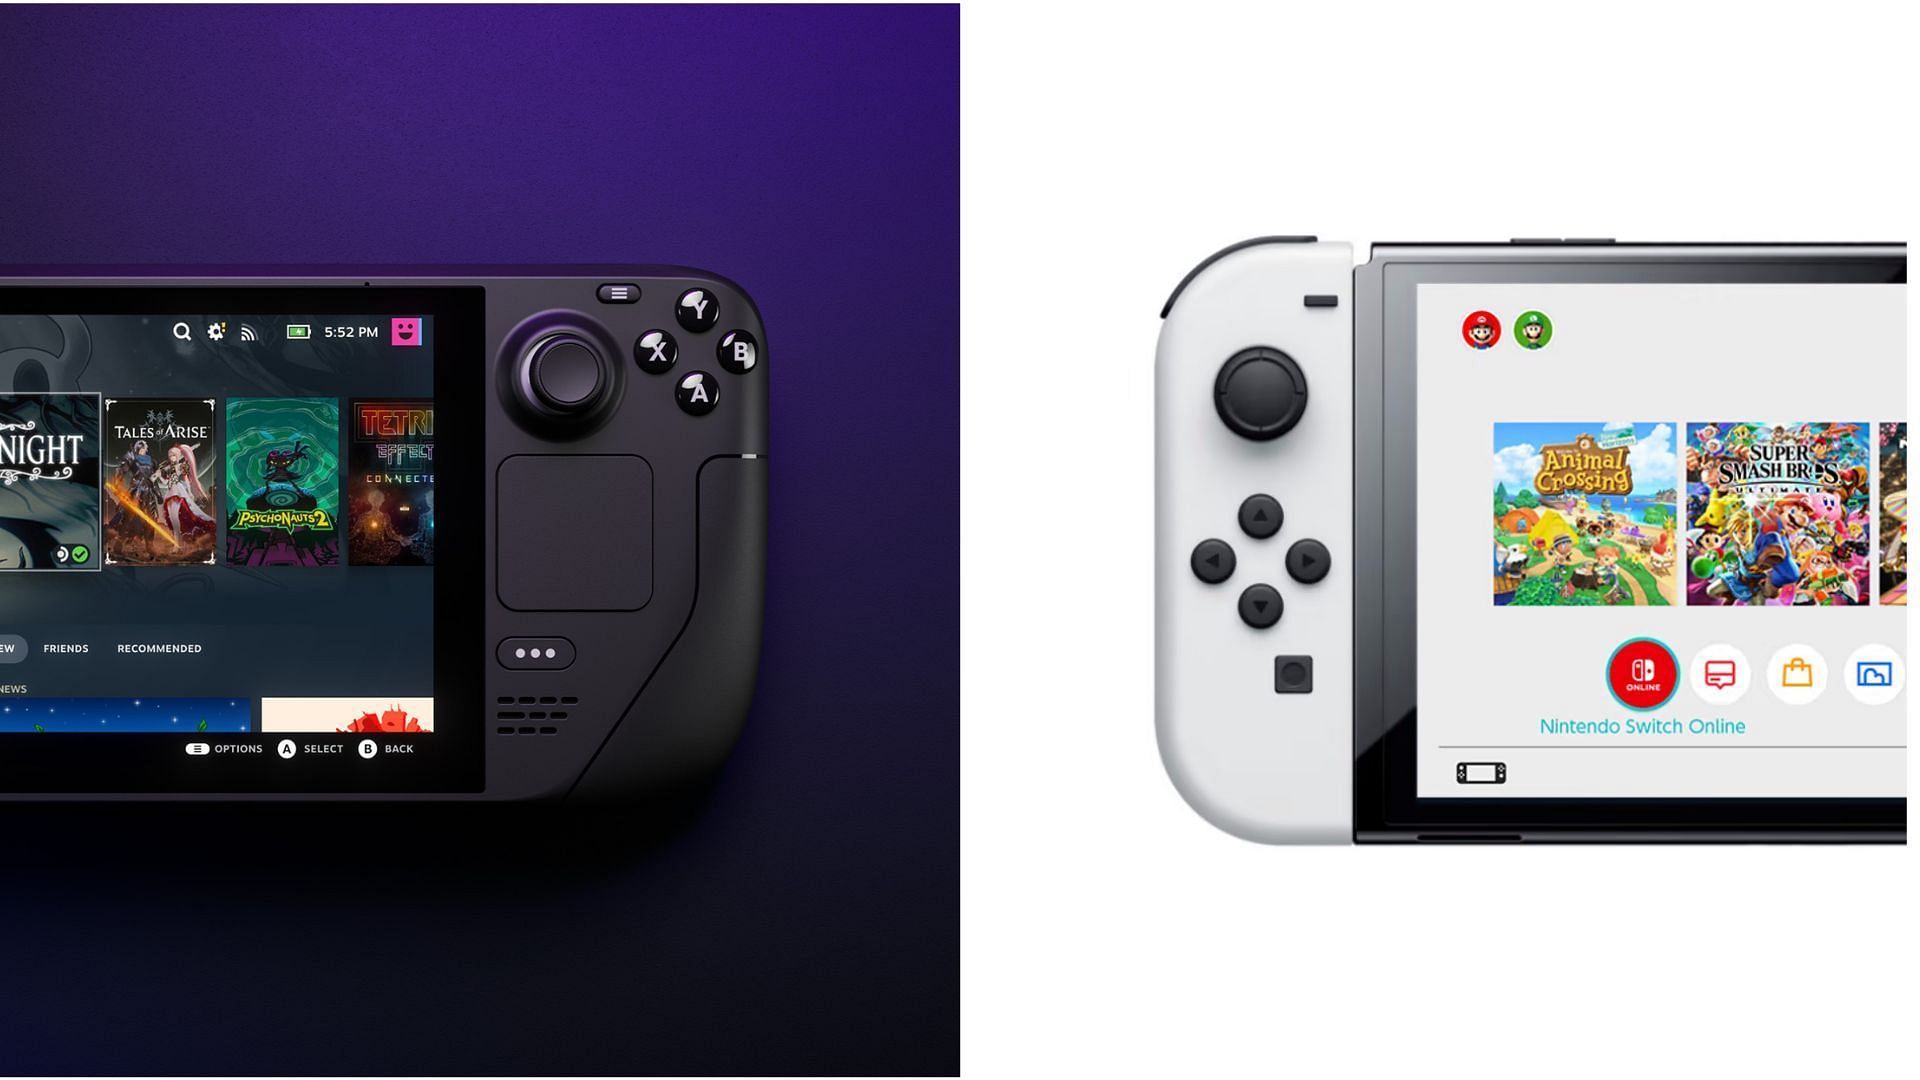 The Switch OLED display looks breathtaking (Image via Nintendo and Valve)